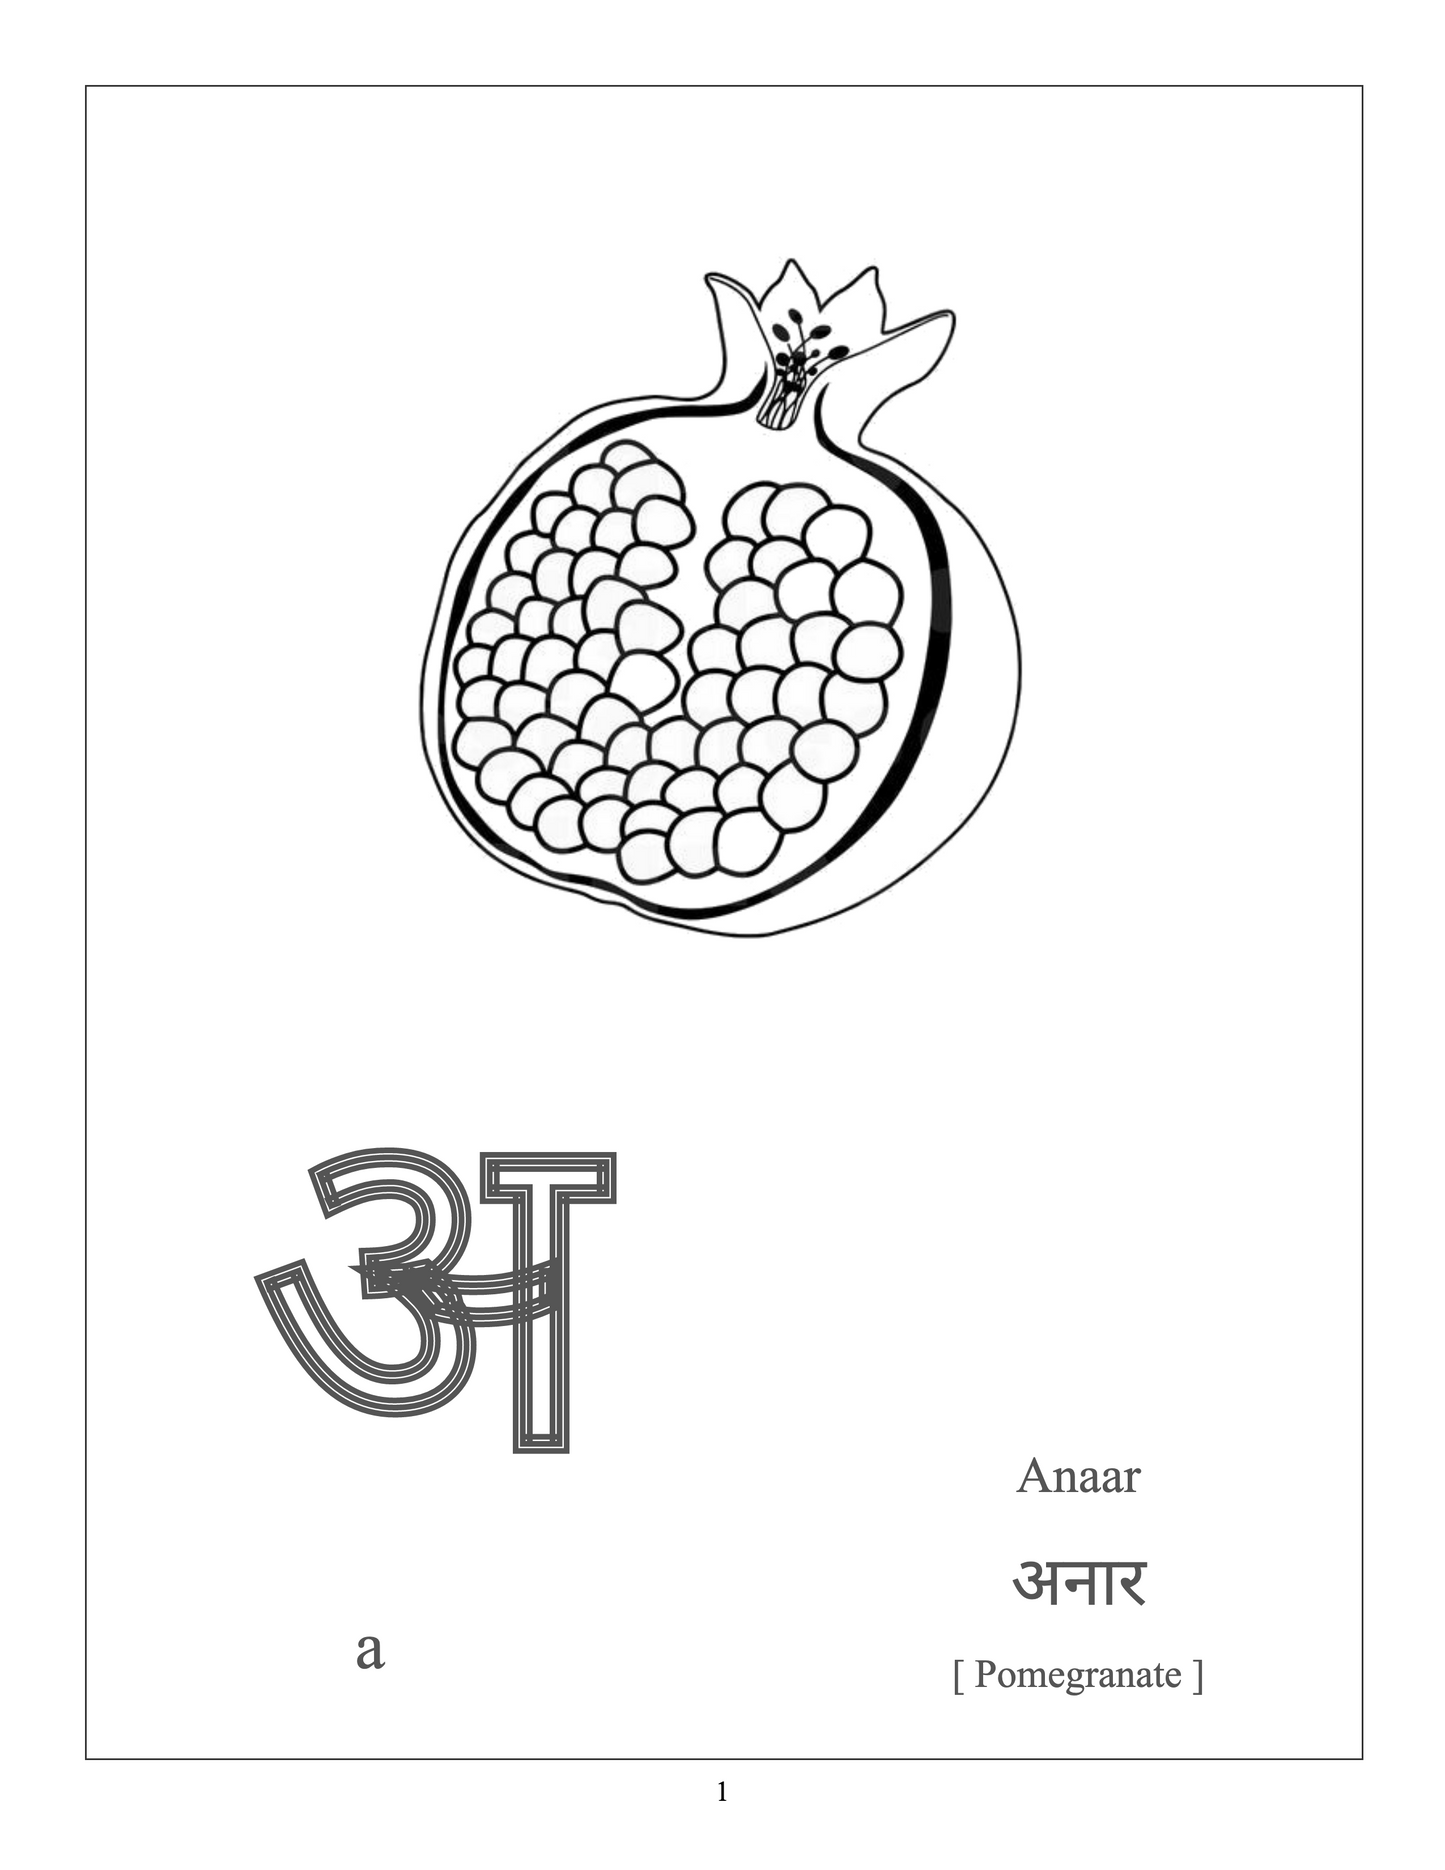 Hindi Alphabet Coloring Pages (49 pages), Hindi Vowels and Hindi Conso ...